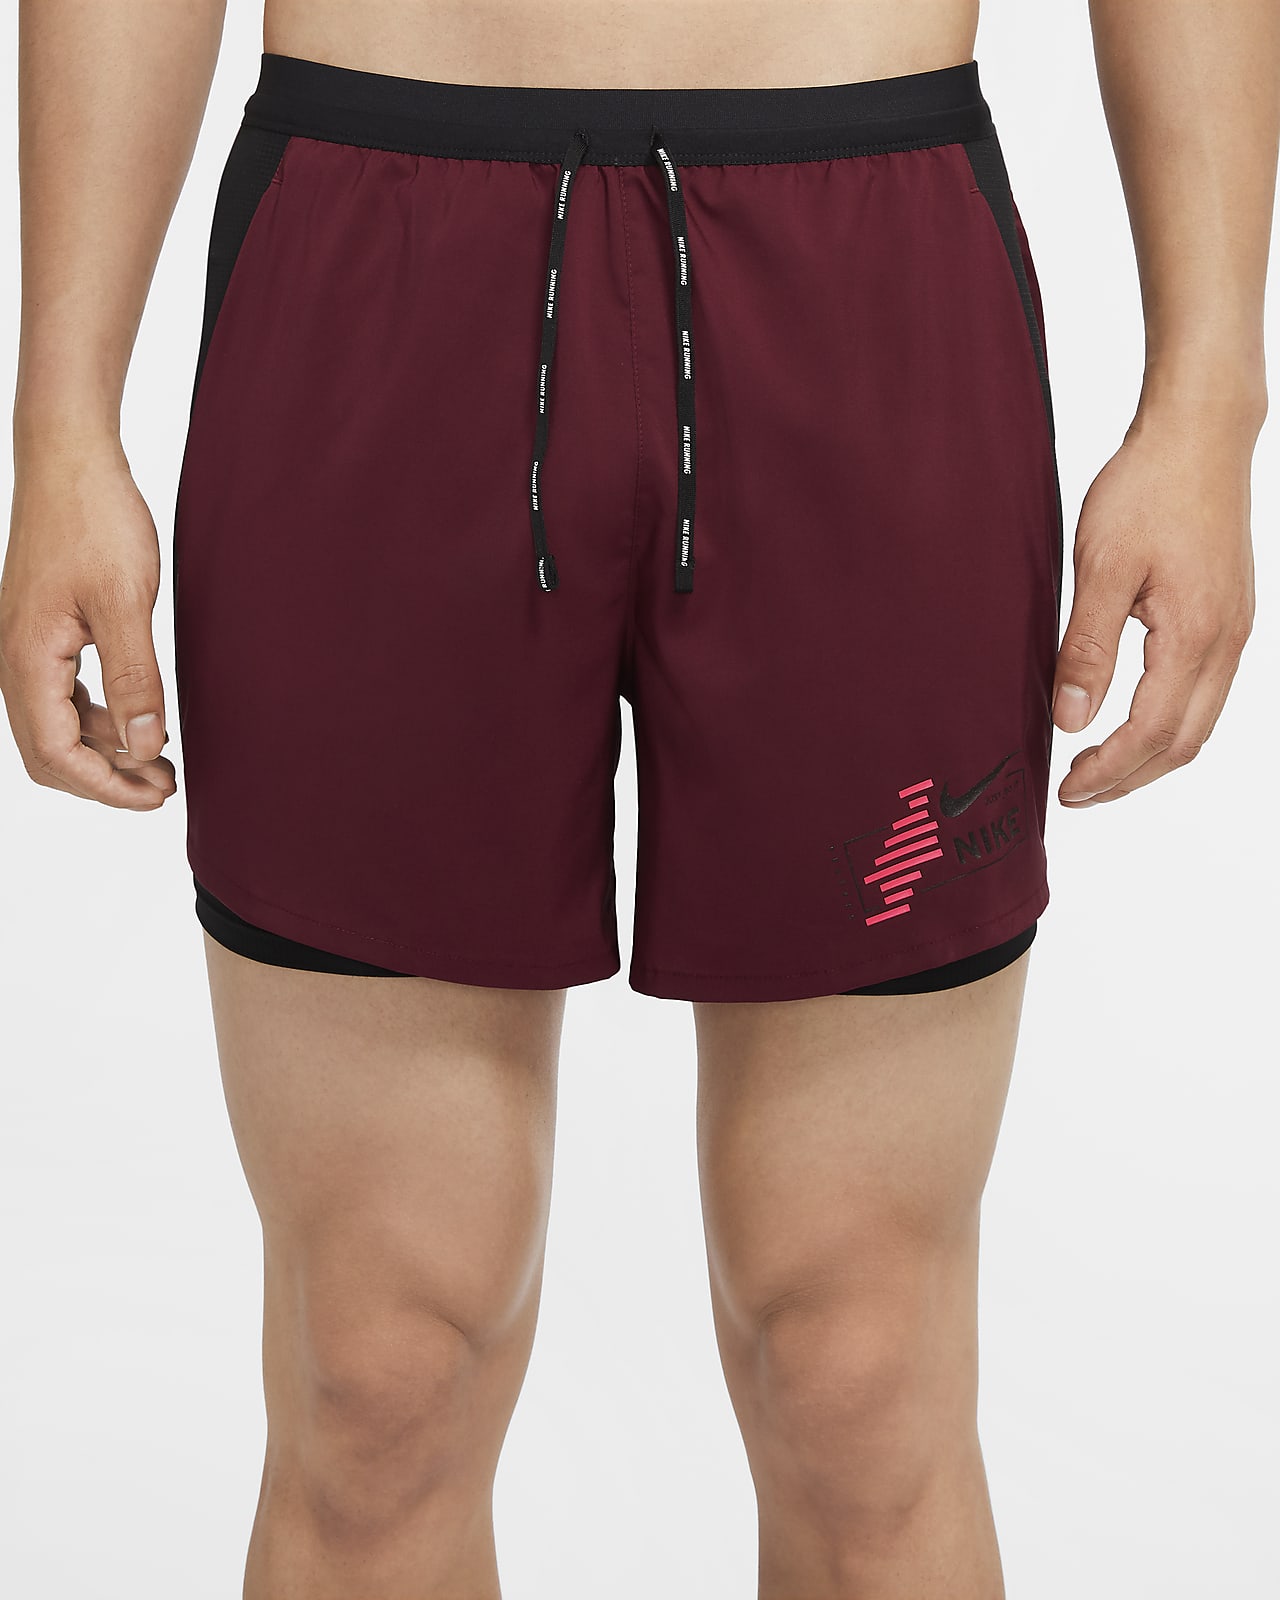 nike 2 in 1 shorts